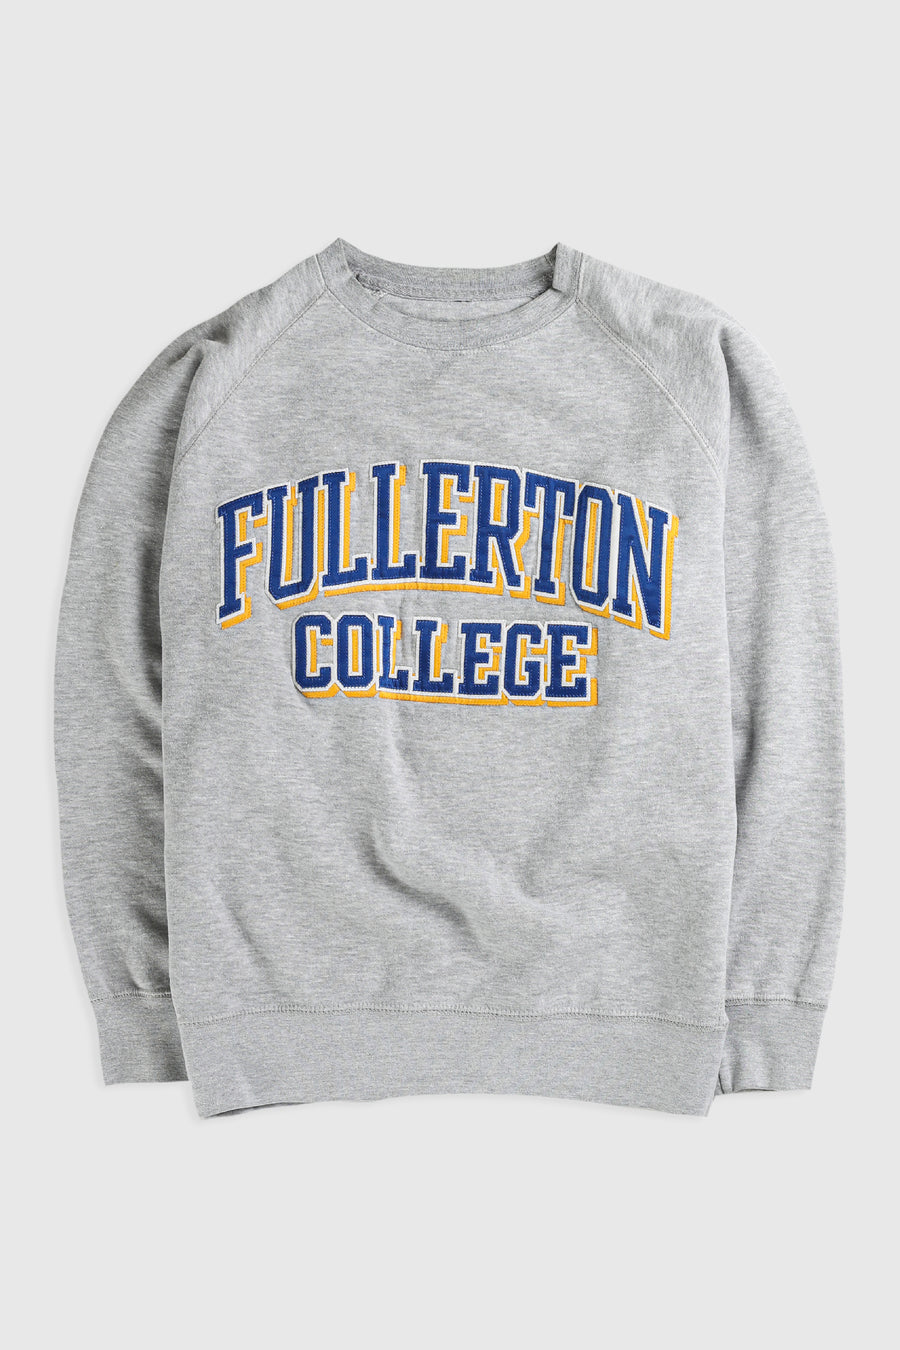 Vintage Fullerton State Sweatshirt